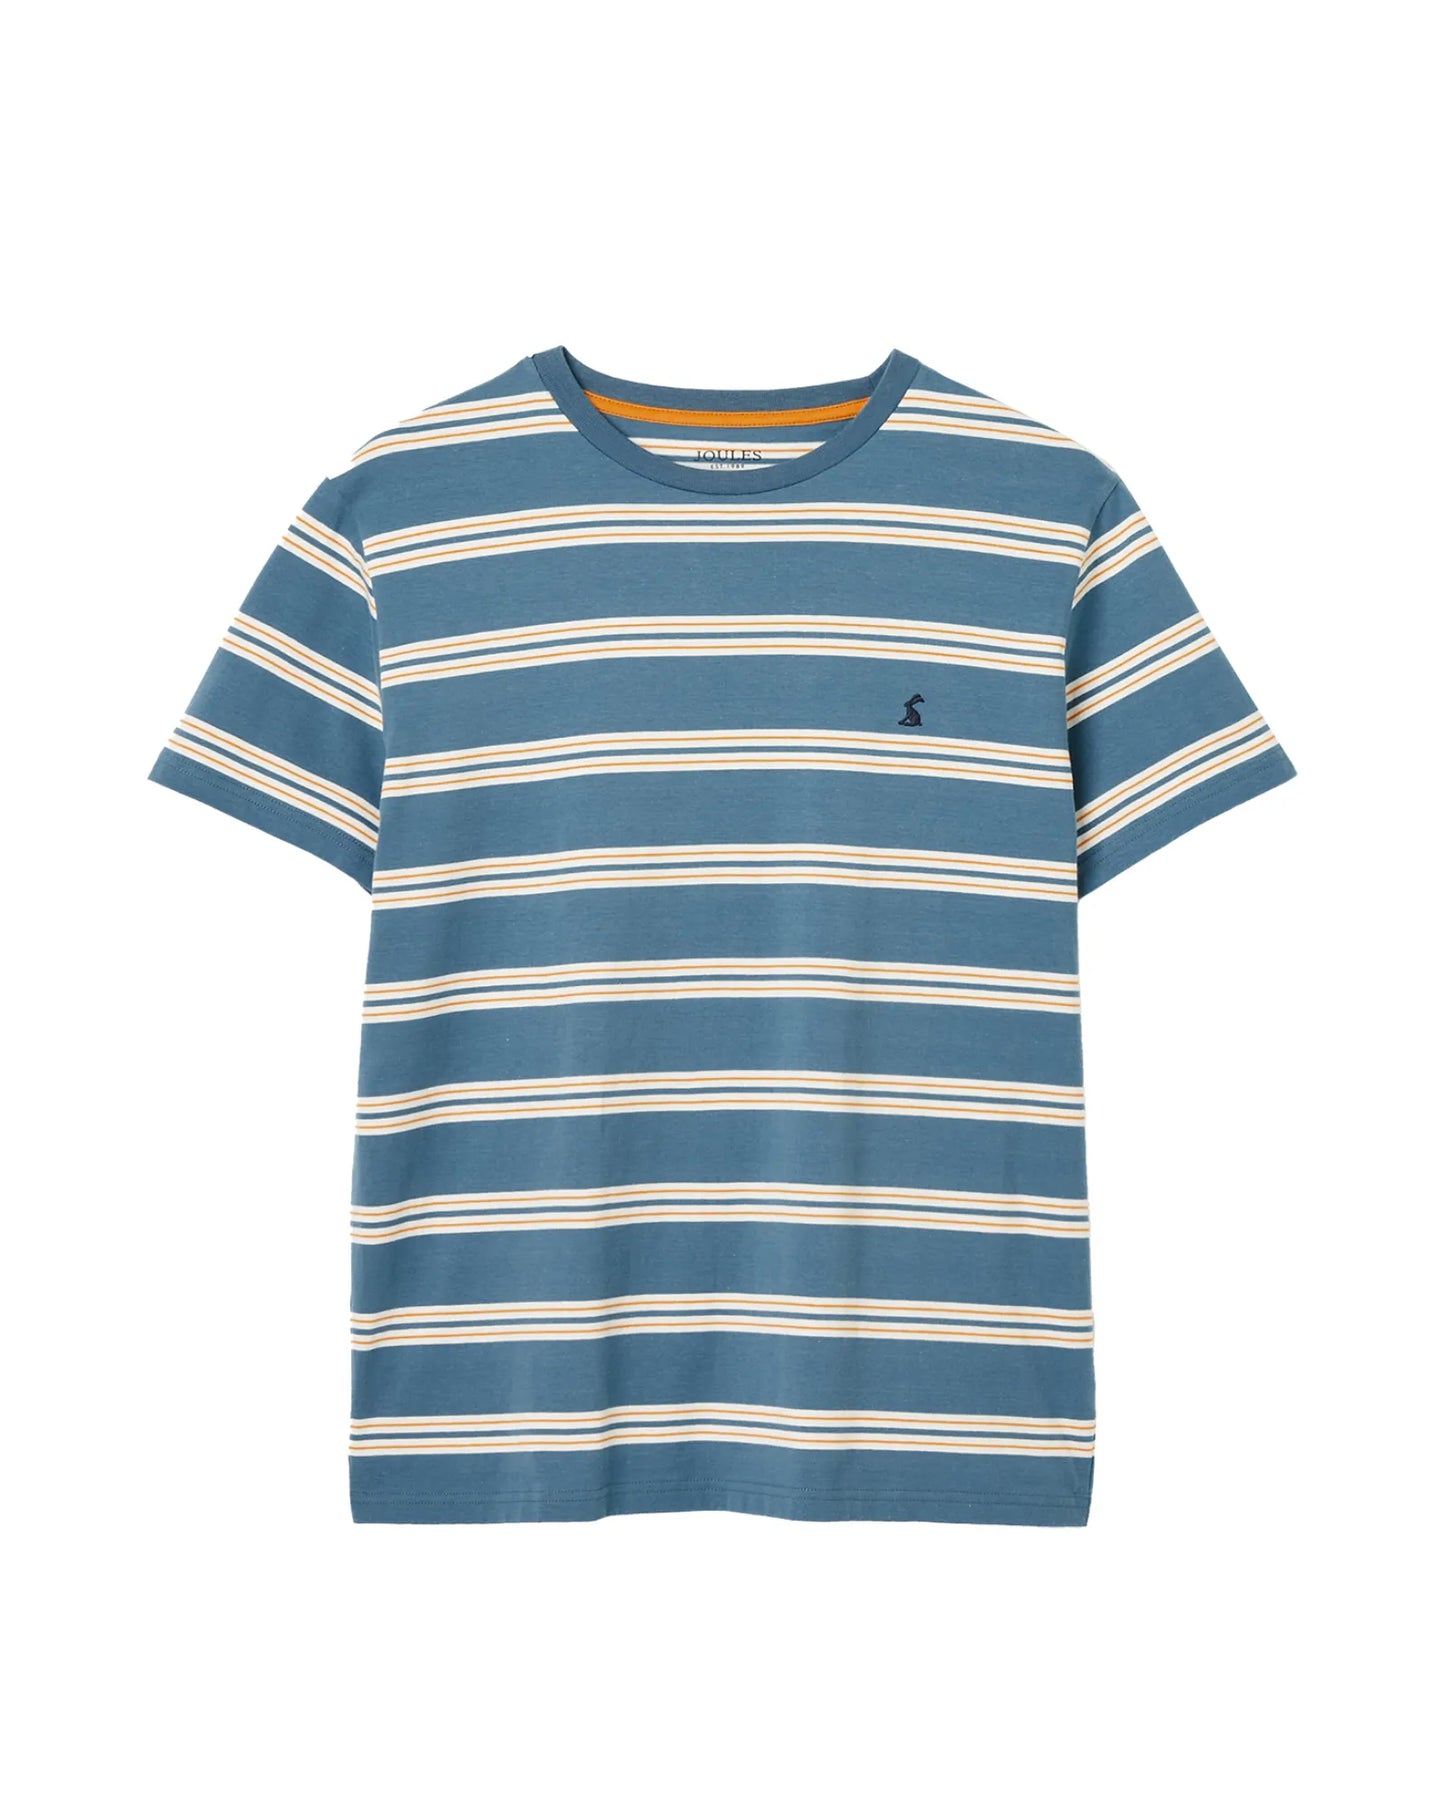 Boathouse Striped T-Shirt - Blue Gold Stripe